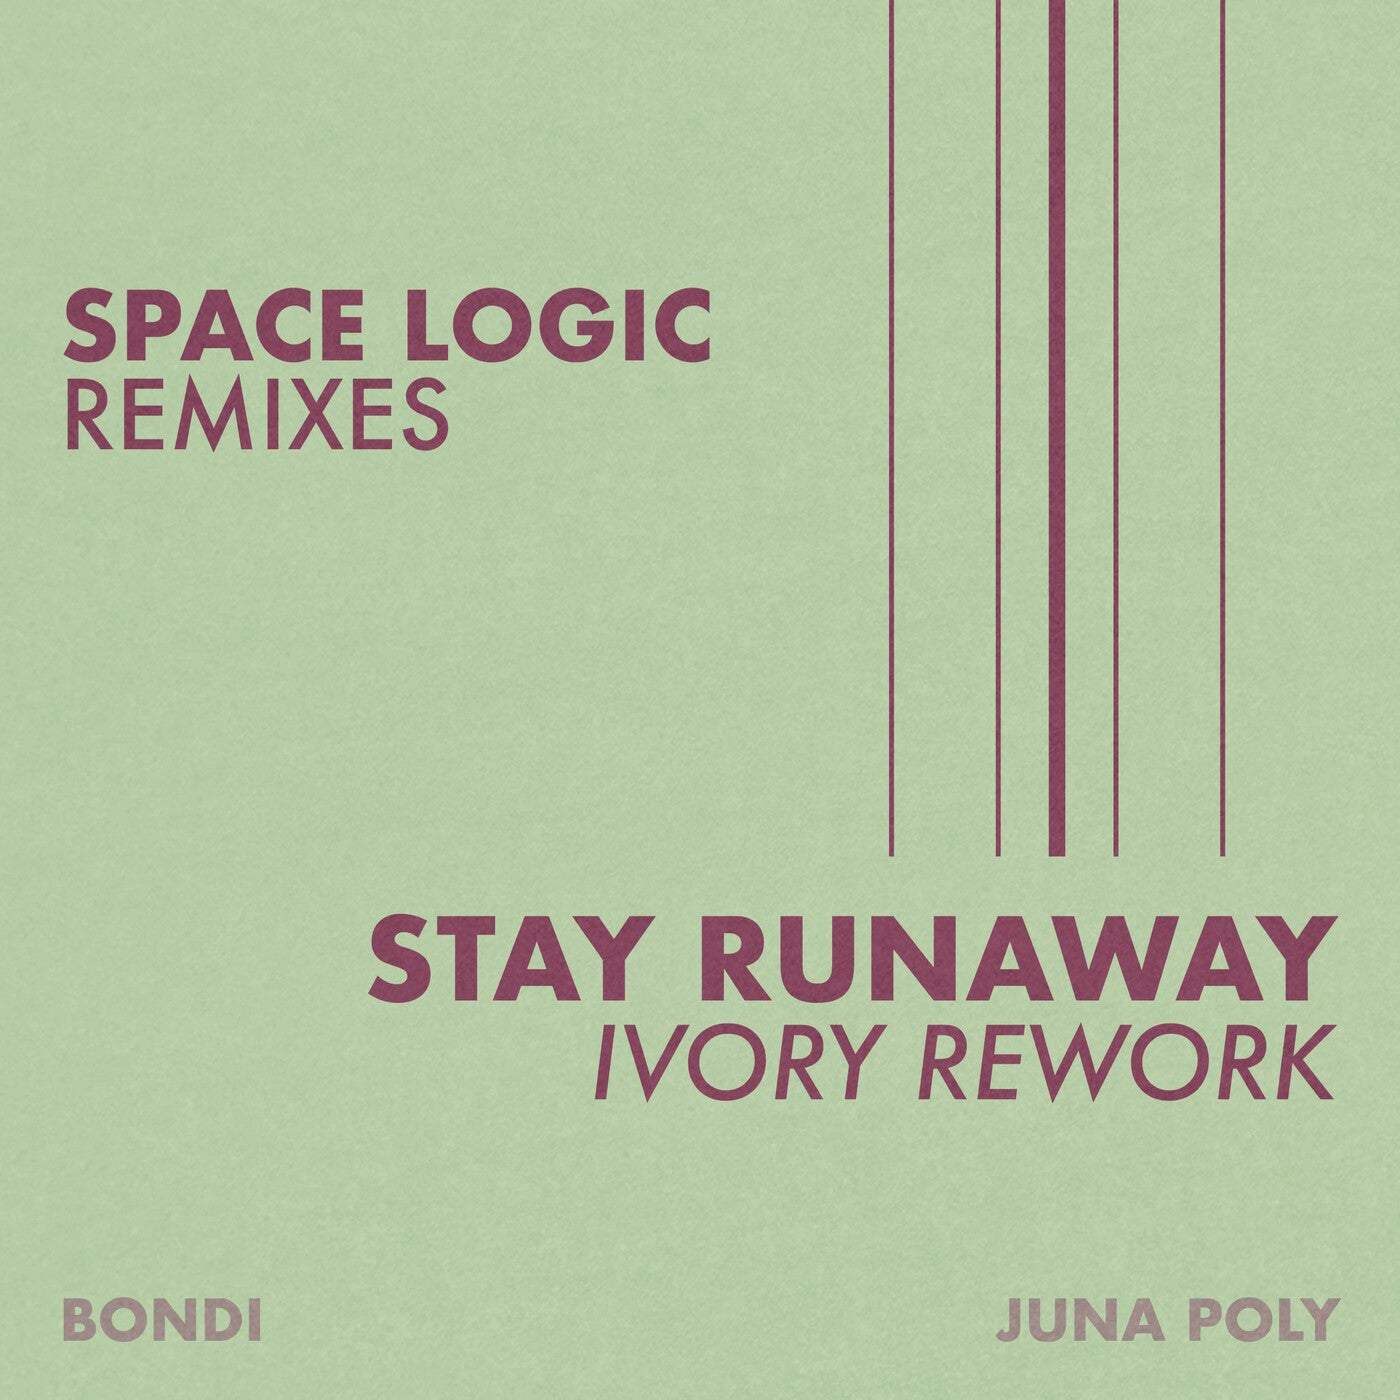 Download BONDI - Stay Runaway (Ivory Rework) on Electrobuzz